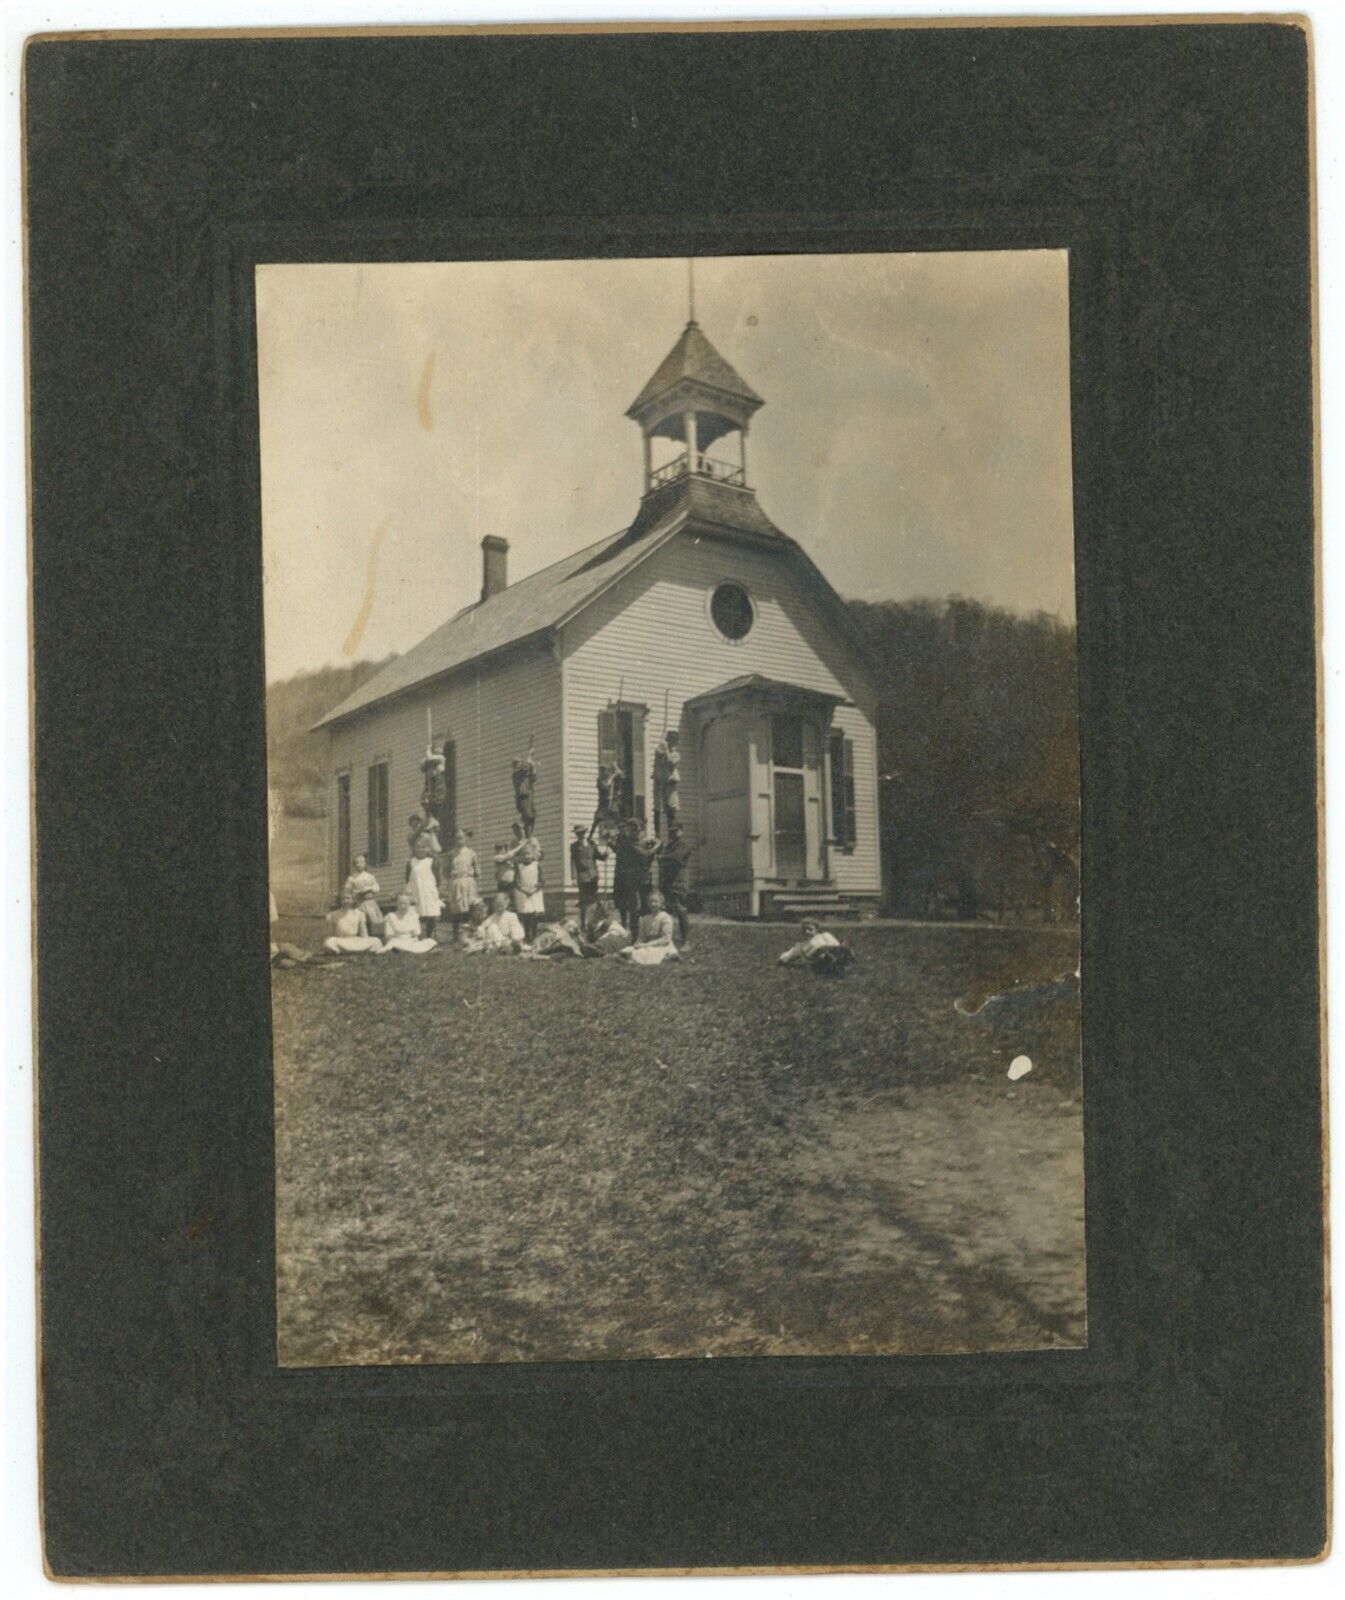 CIRCA 1900'S Rare CABINET CARD Featuring School House with Children & Teacher